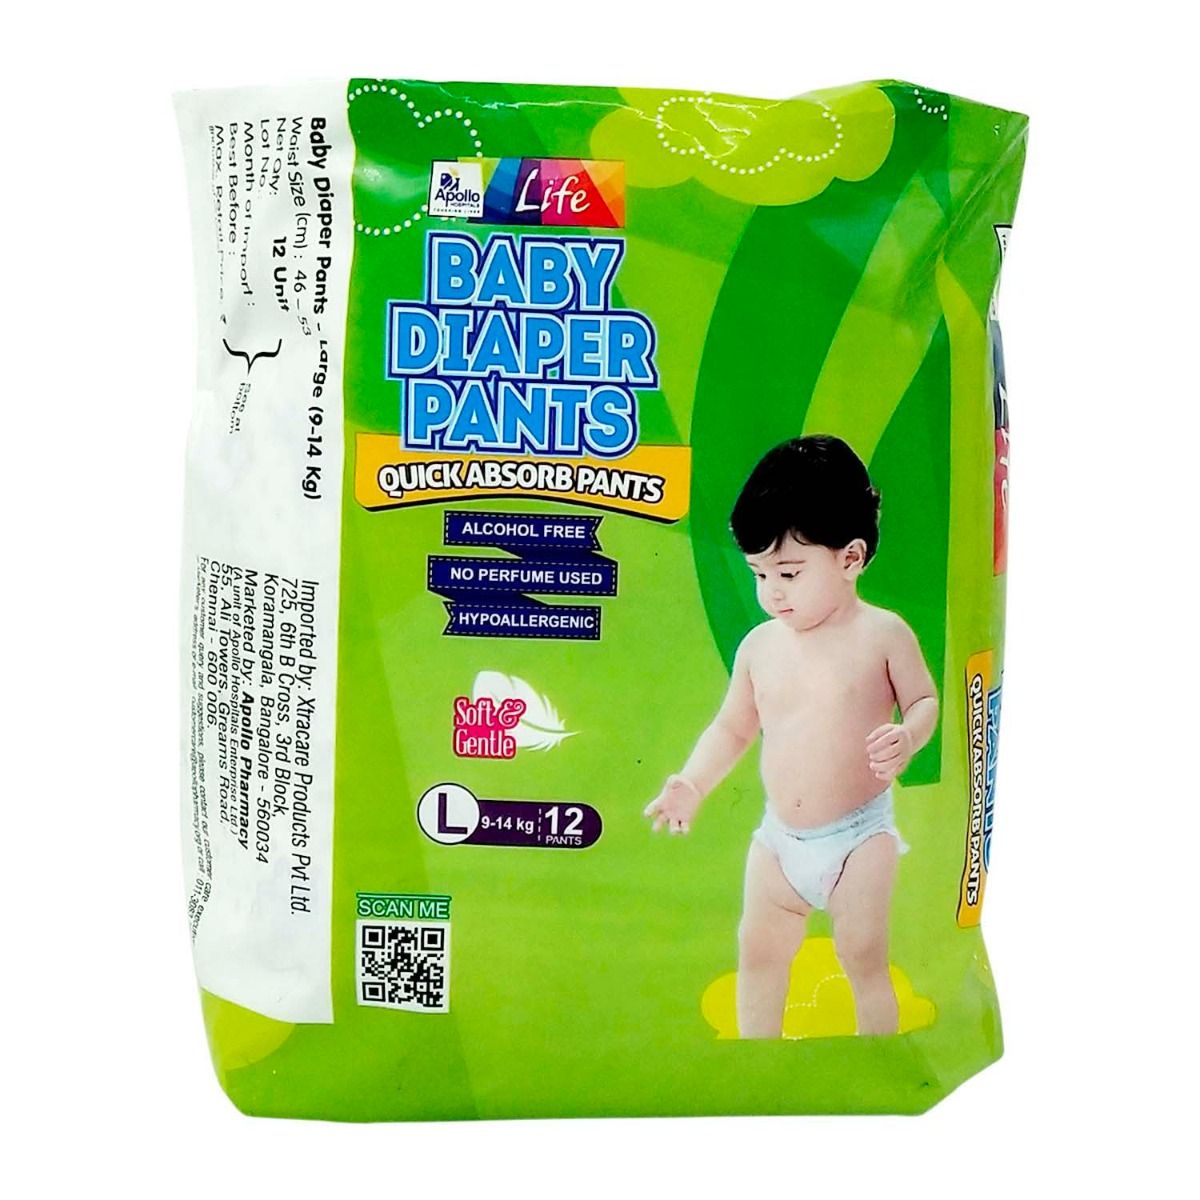 Buy Apollo Life Baby Diaper Pants Large, 12 Count Online